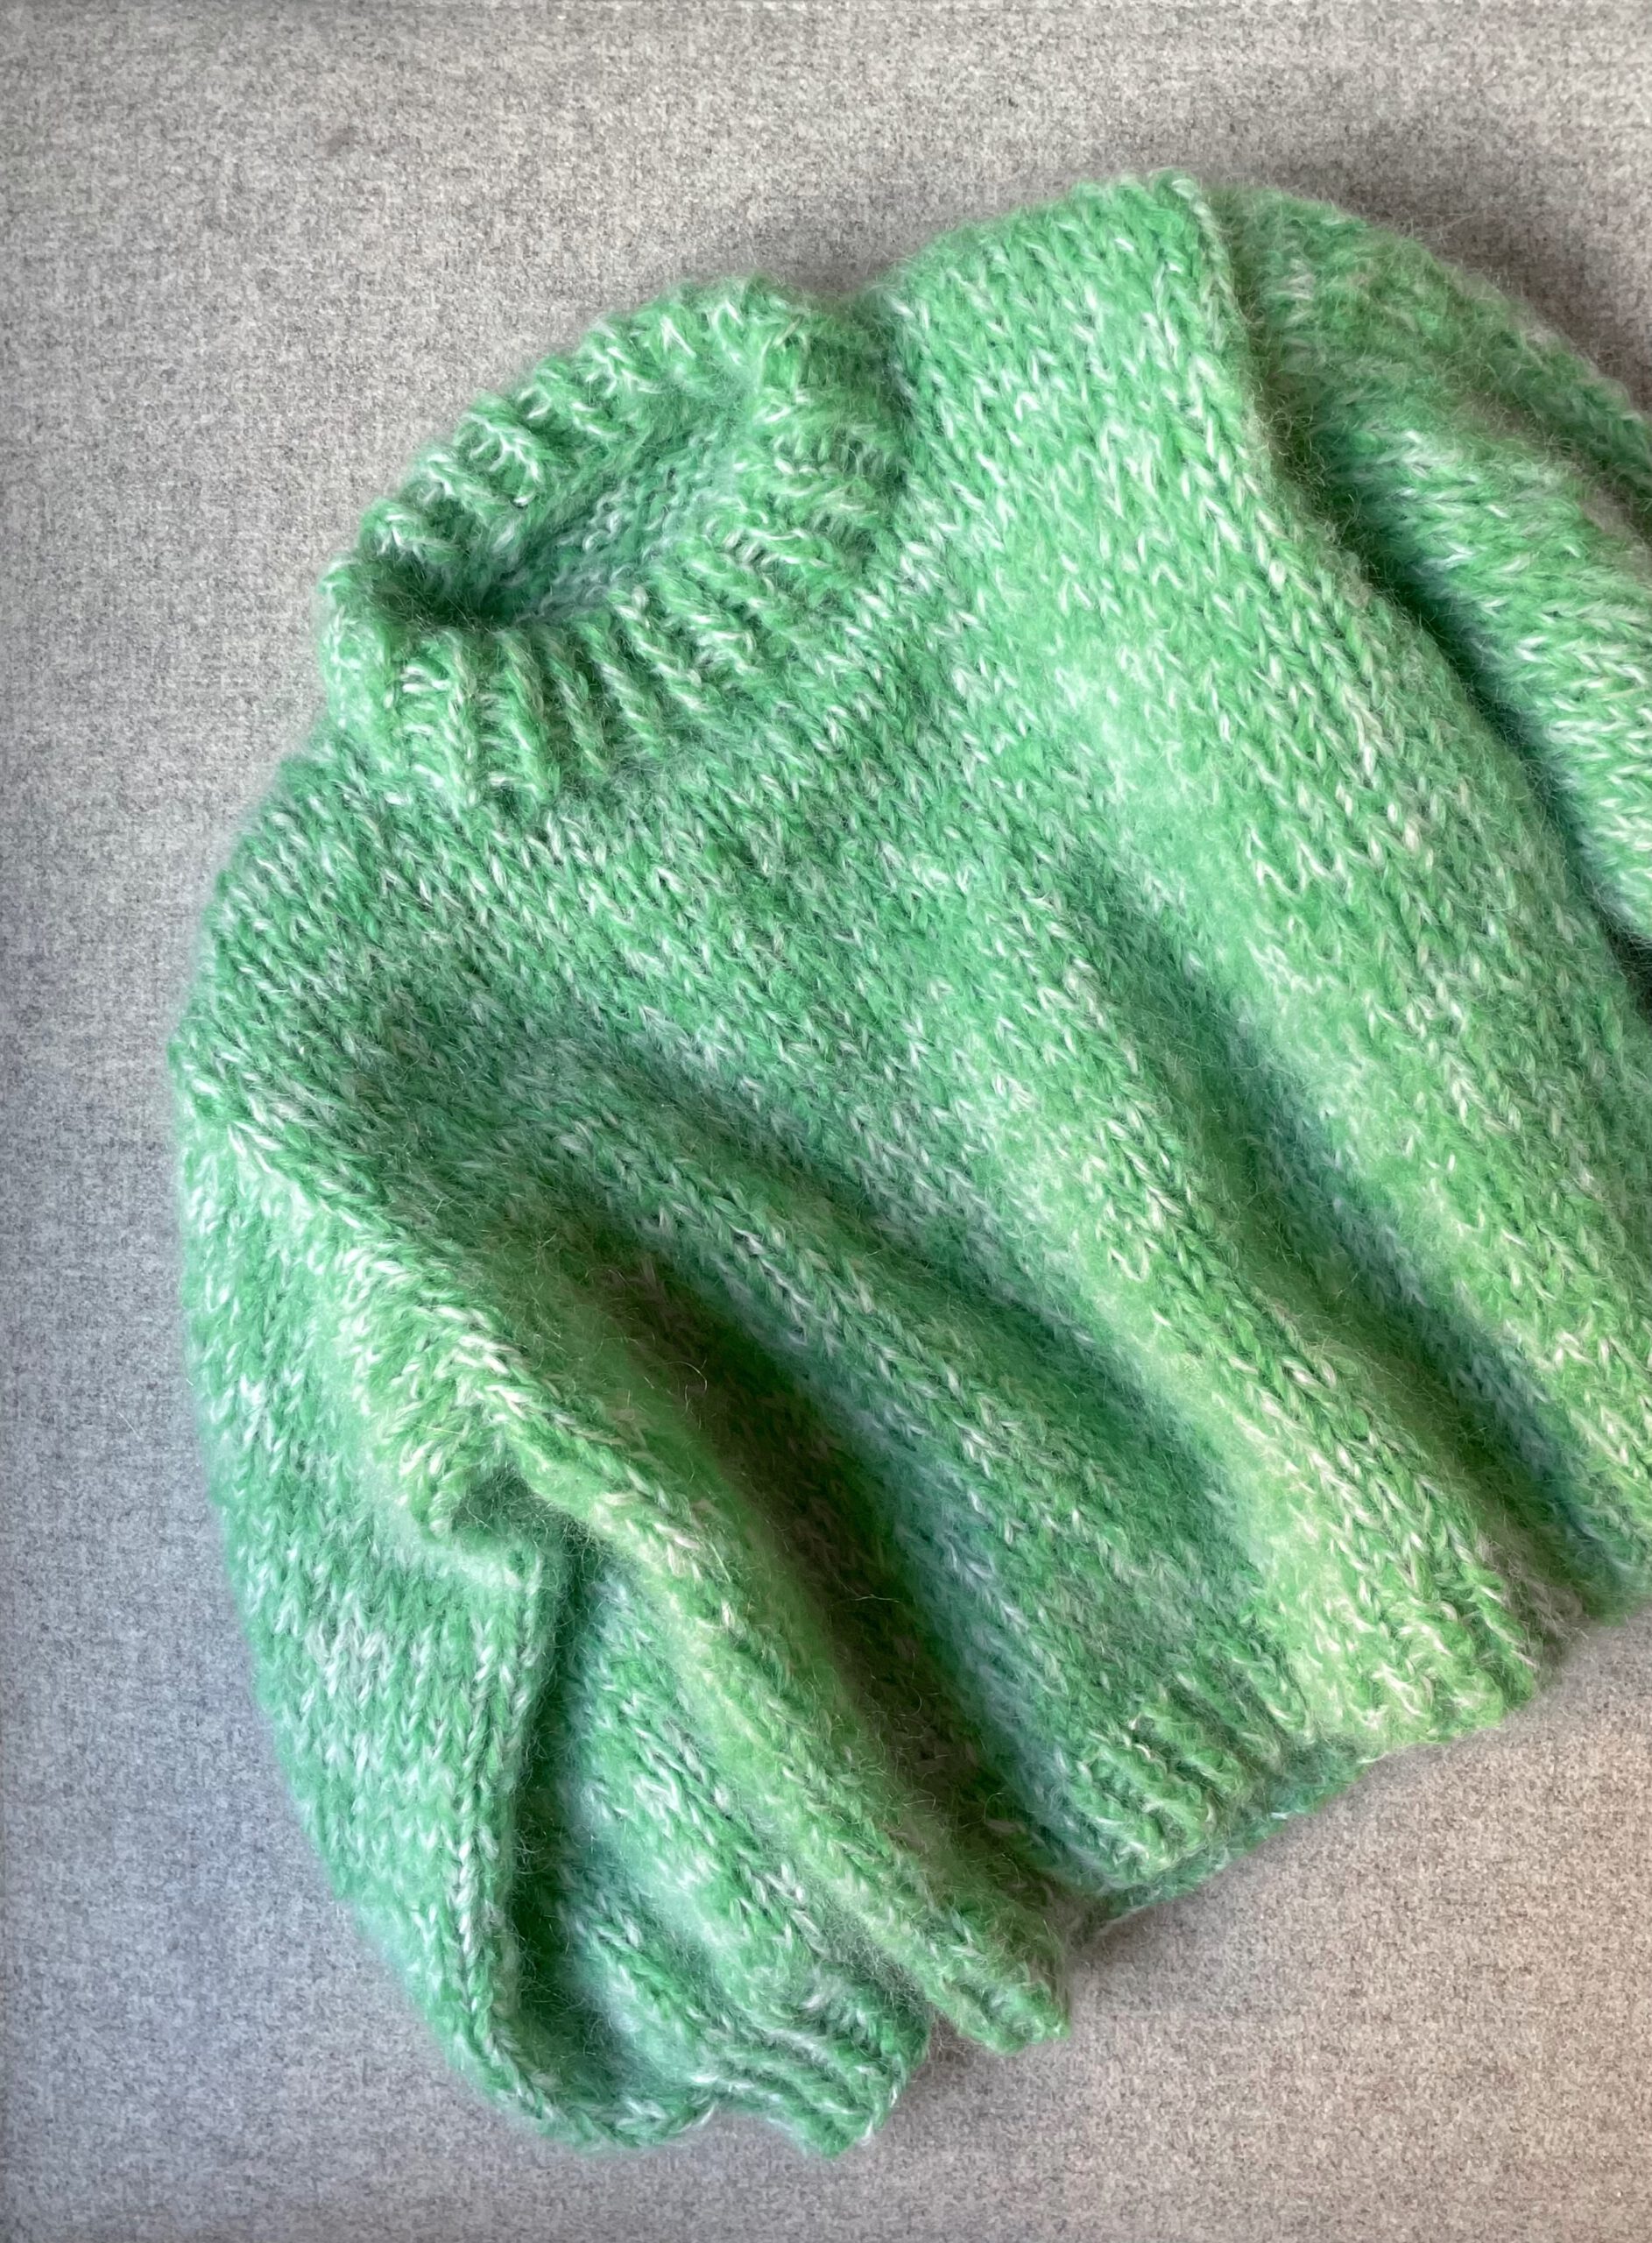  3 gensere du kan strikke selv